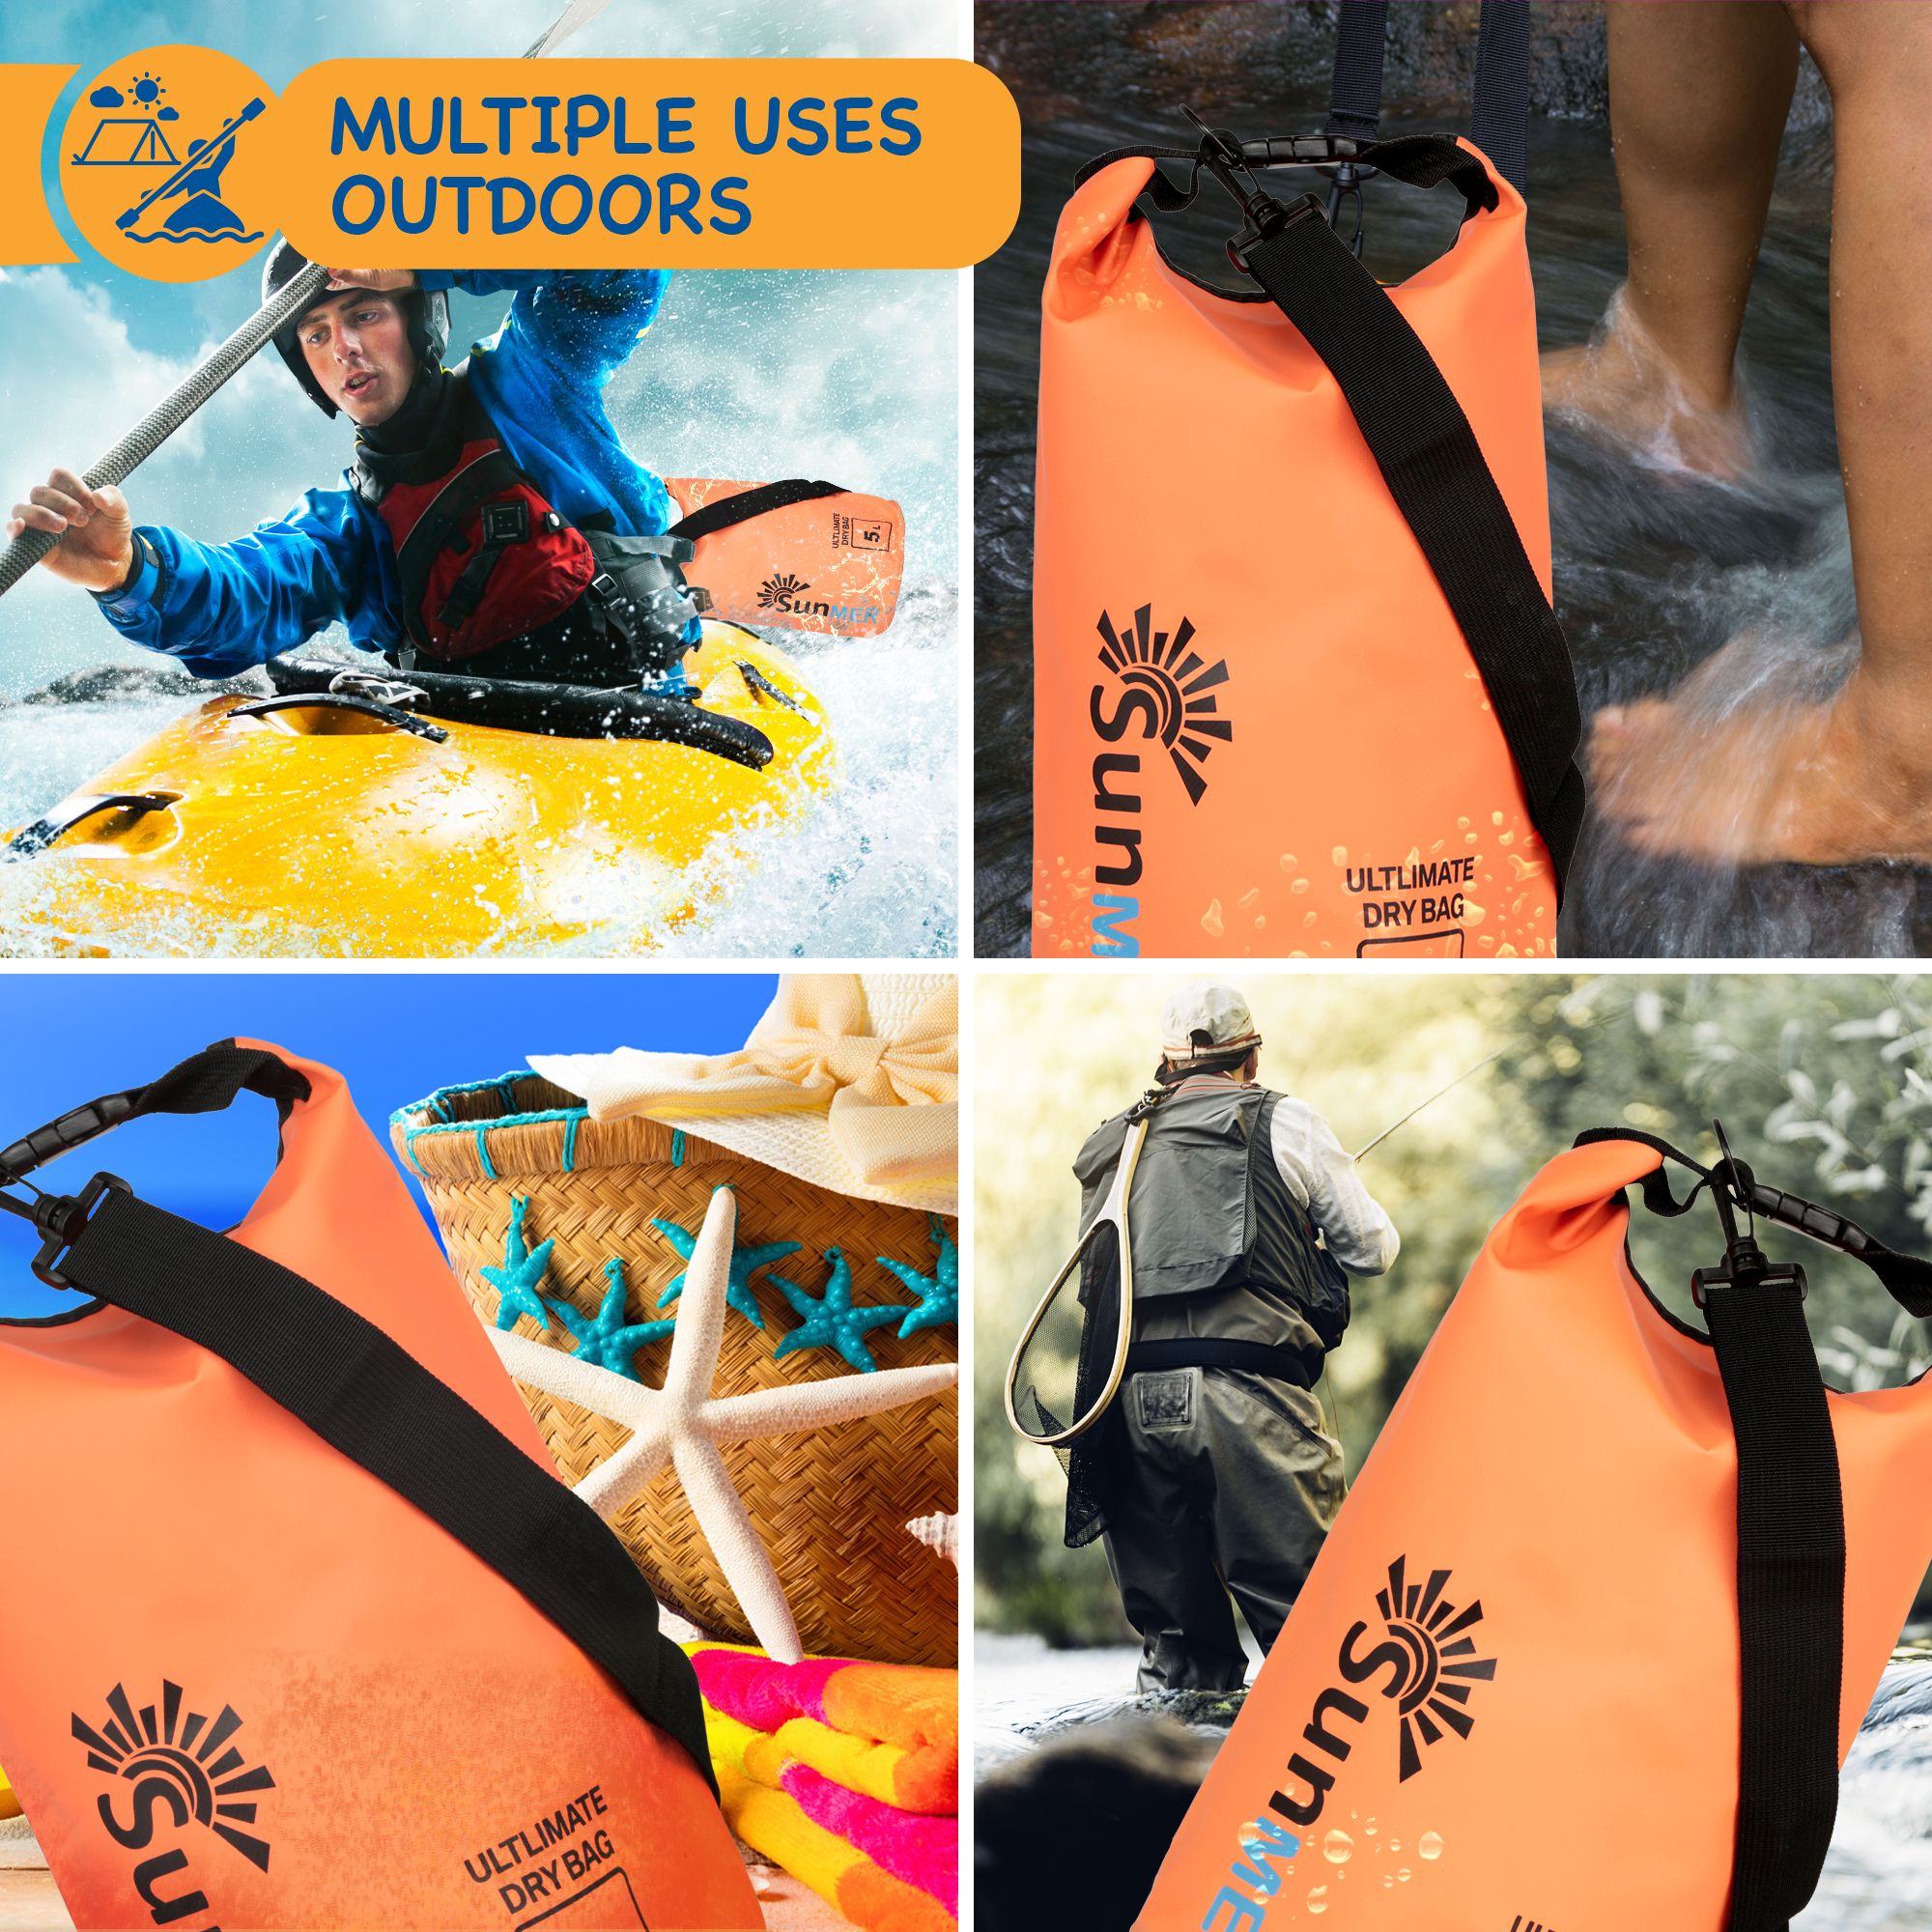 SUNMER 5L Dry Bag With Waterproof Phone Case - Orange